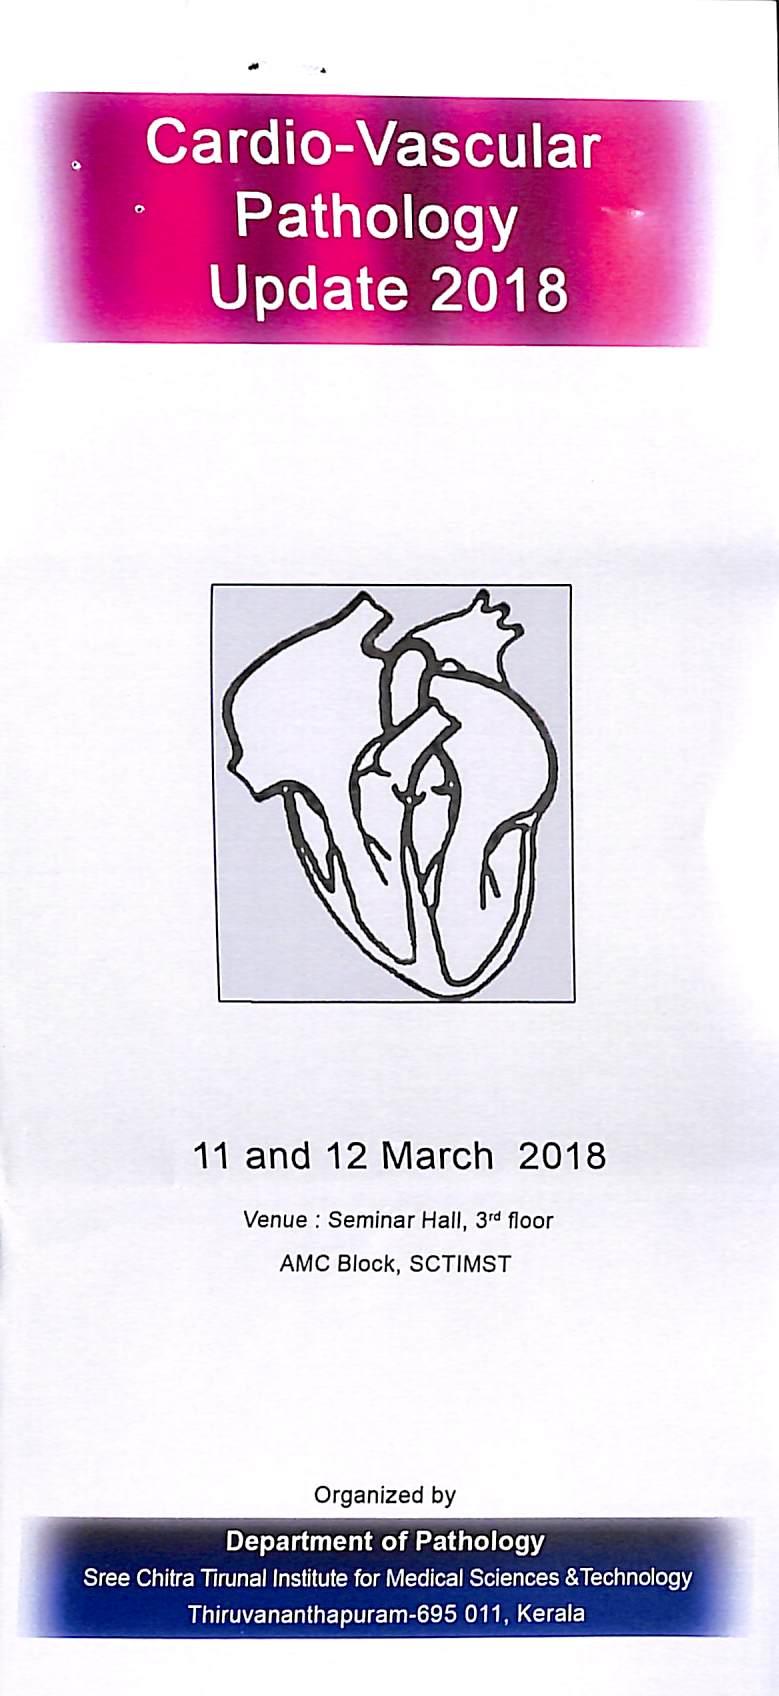 Cardio-Vascular Pathology Update 2018 11 and 12 March 2018 Venue : Seminar Hall, 3"* floor AMC Block, SCTIMST Organized